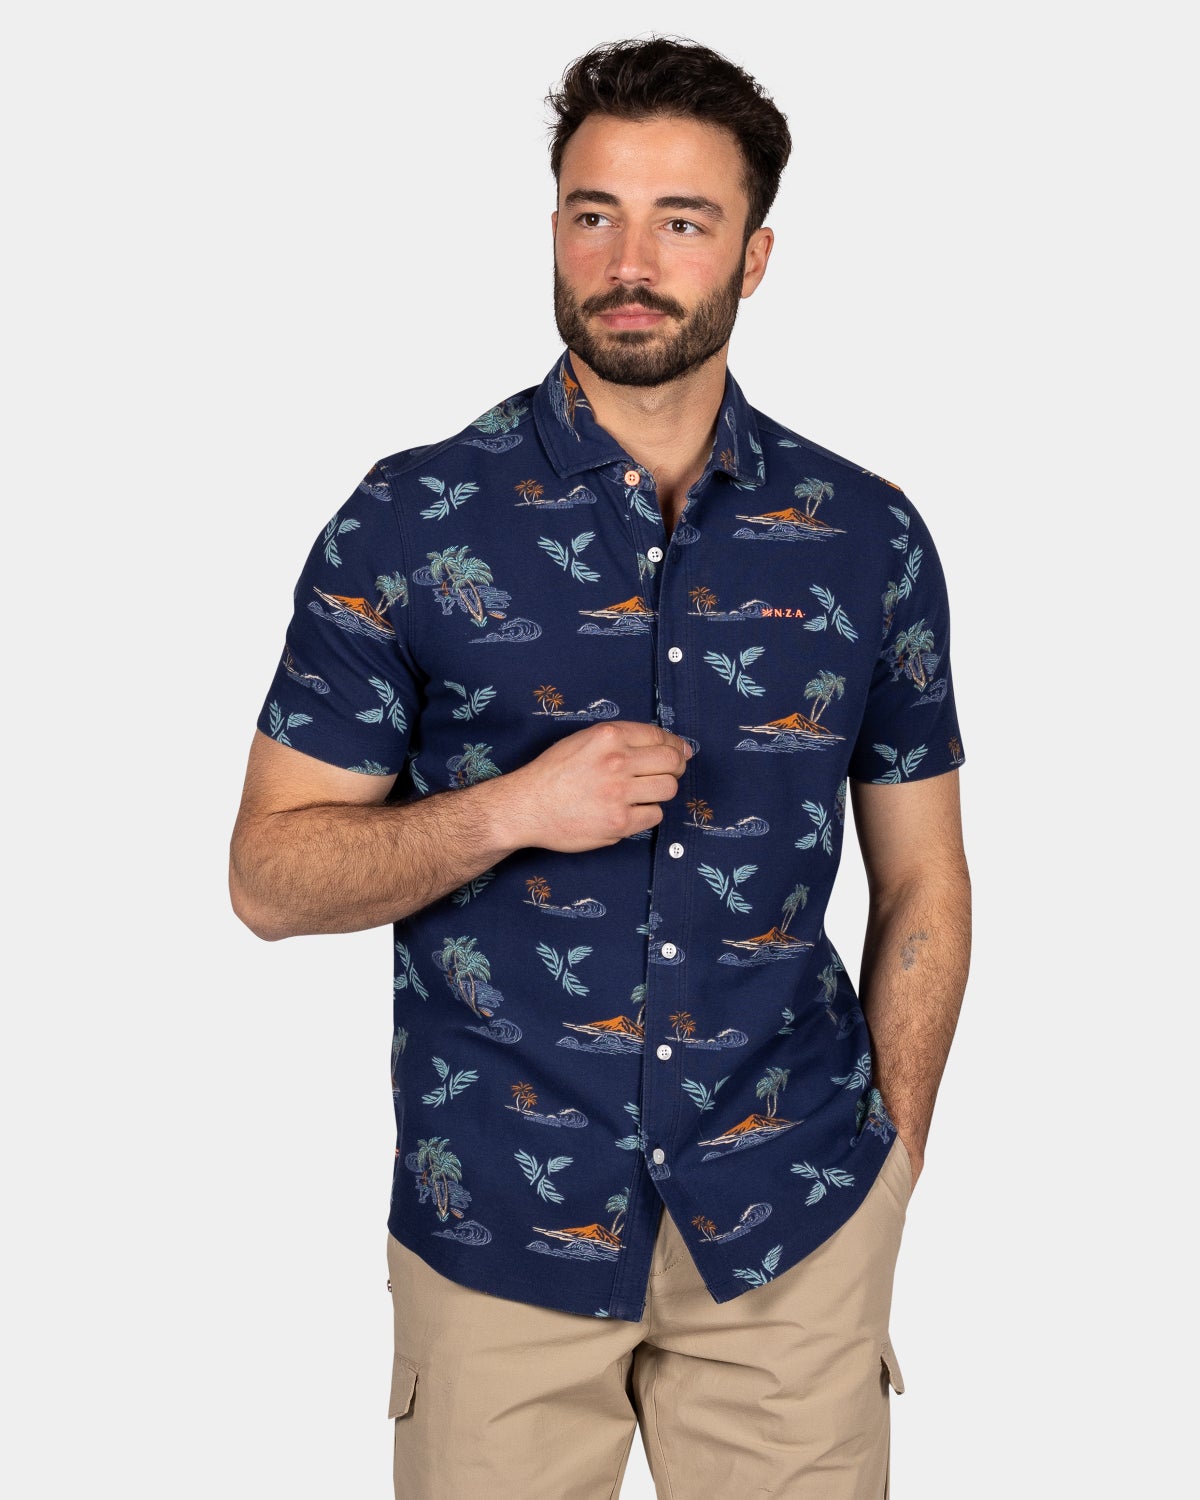 Navy shirt with summer print - Ocean Navy